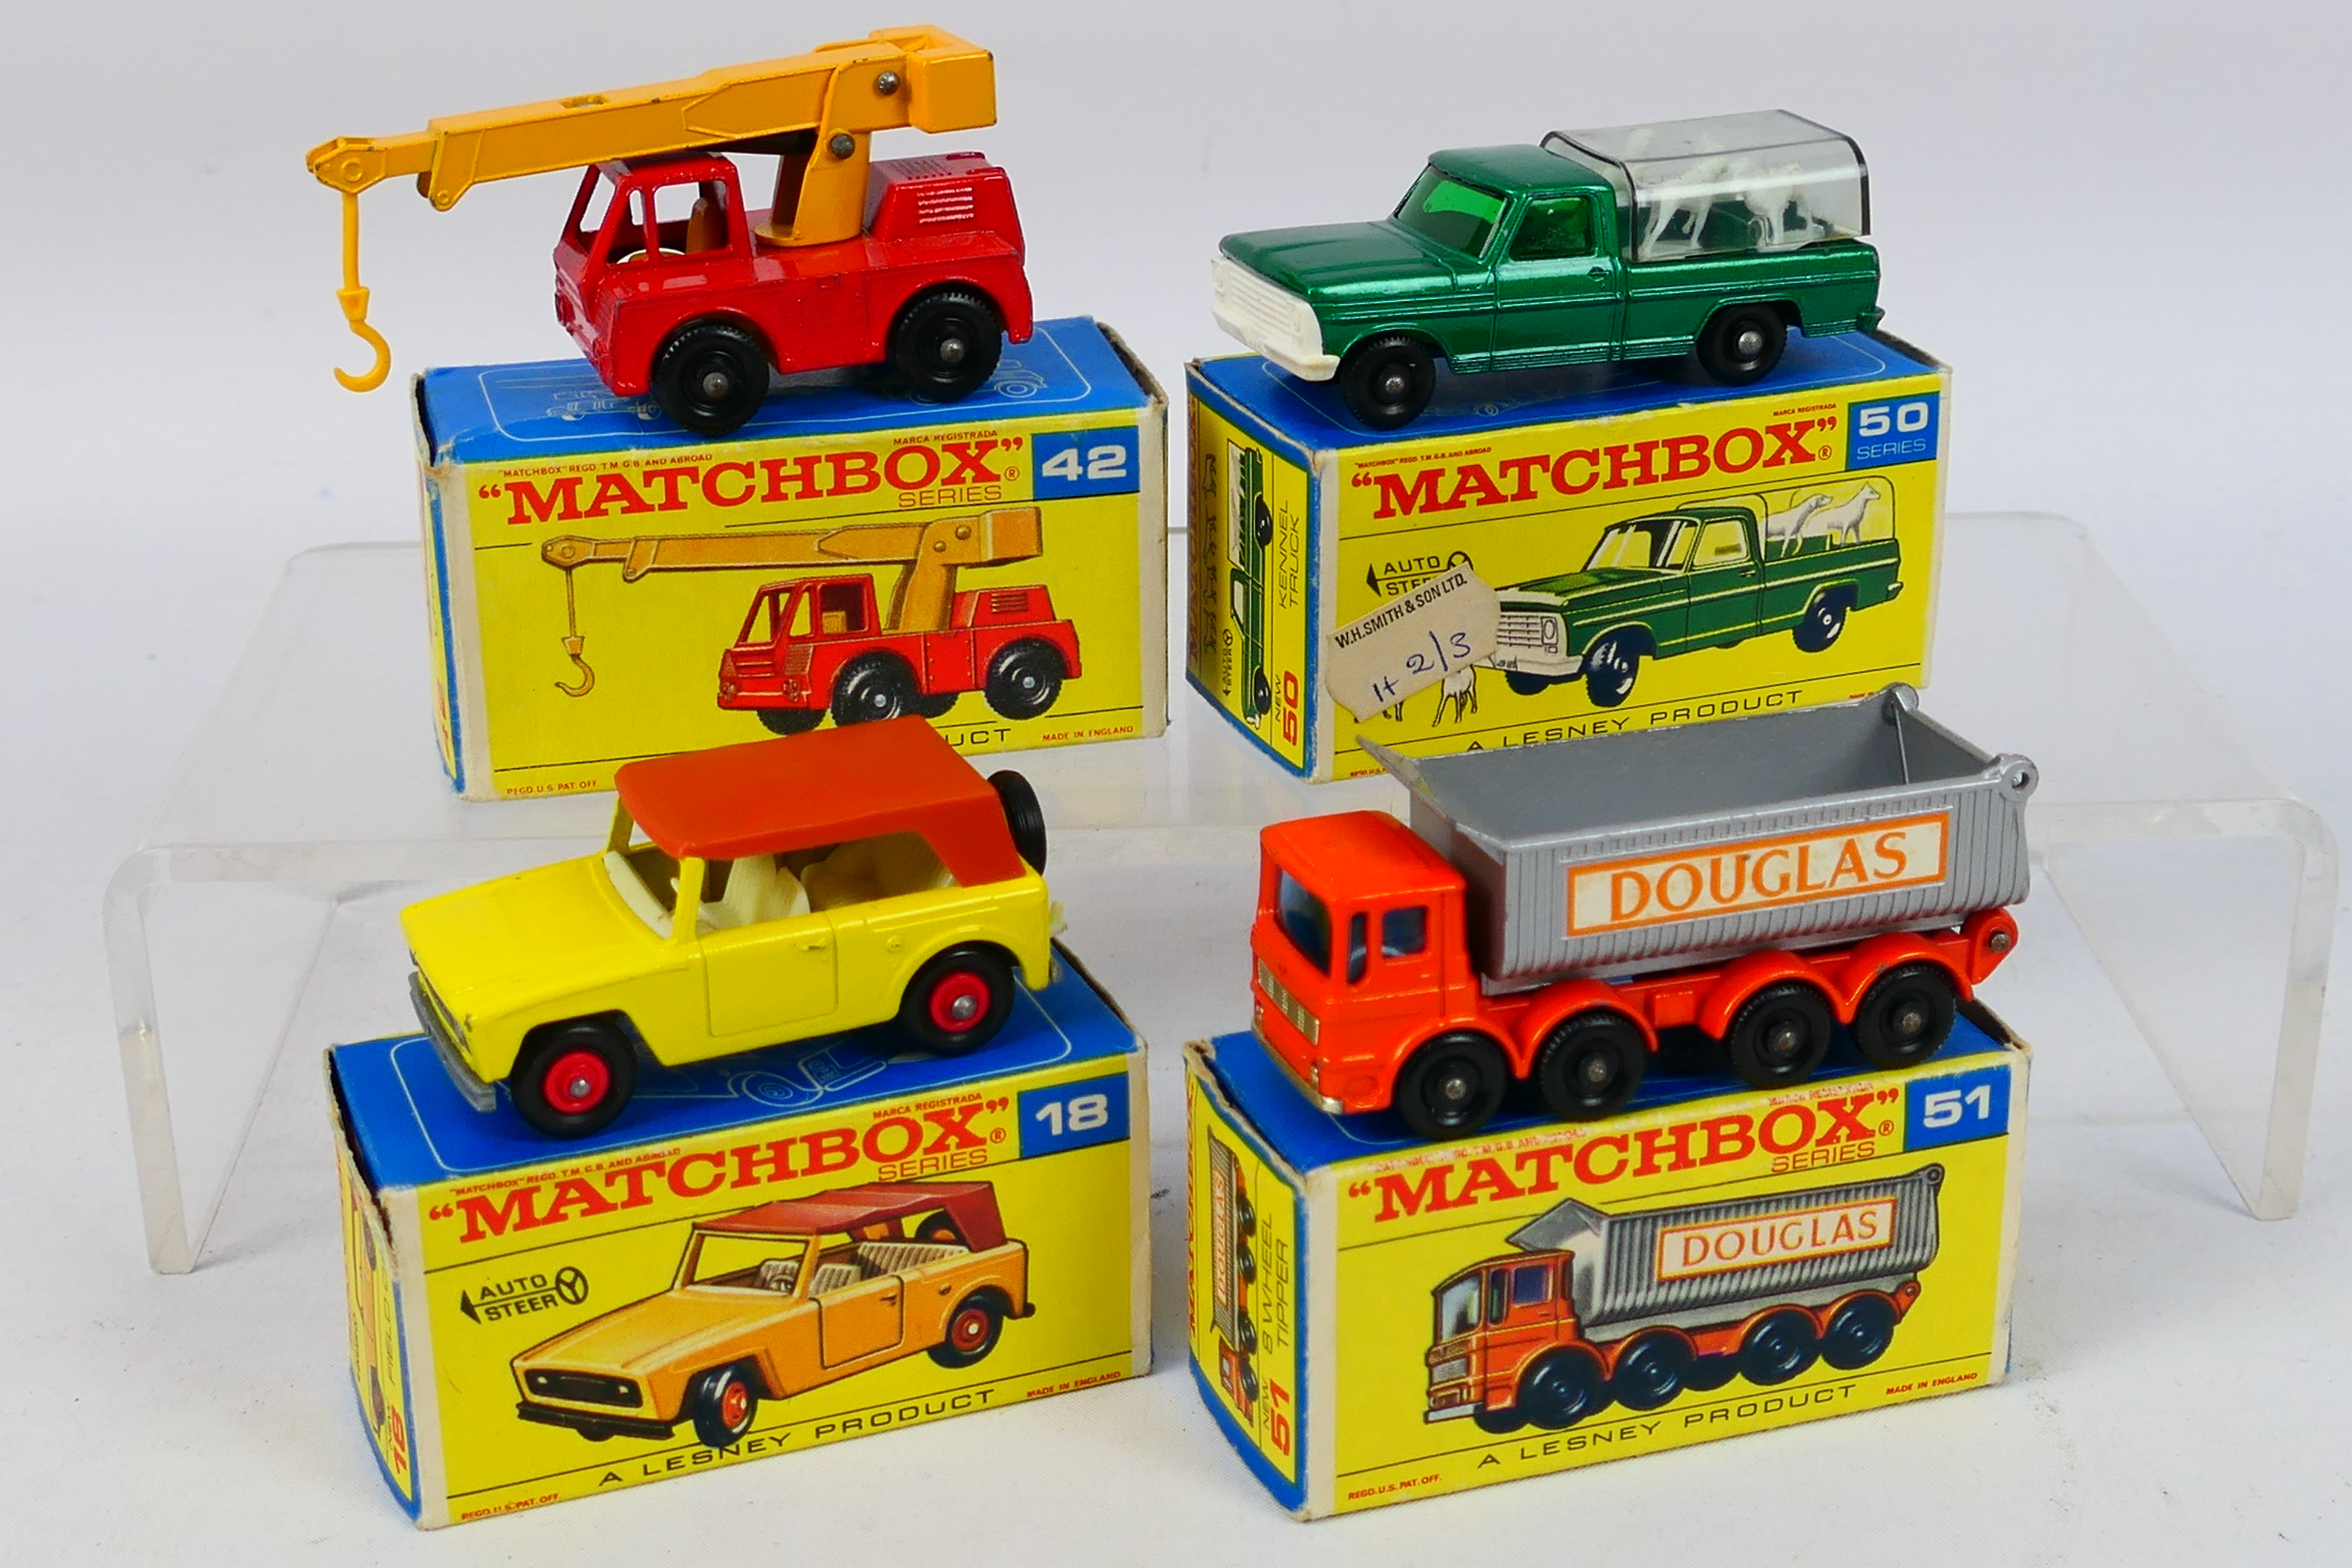 Matchbox - Regular Wheels - 4 x boxed models, Field Car # 18,